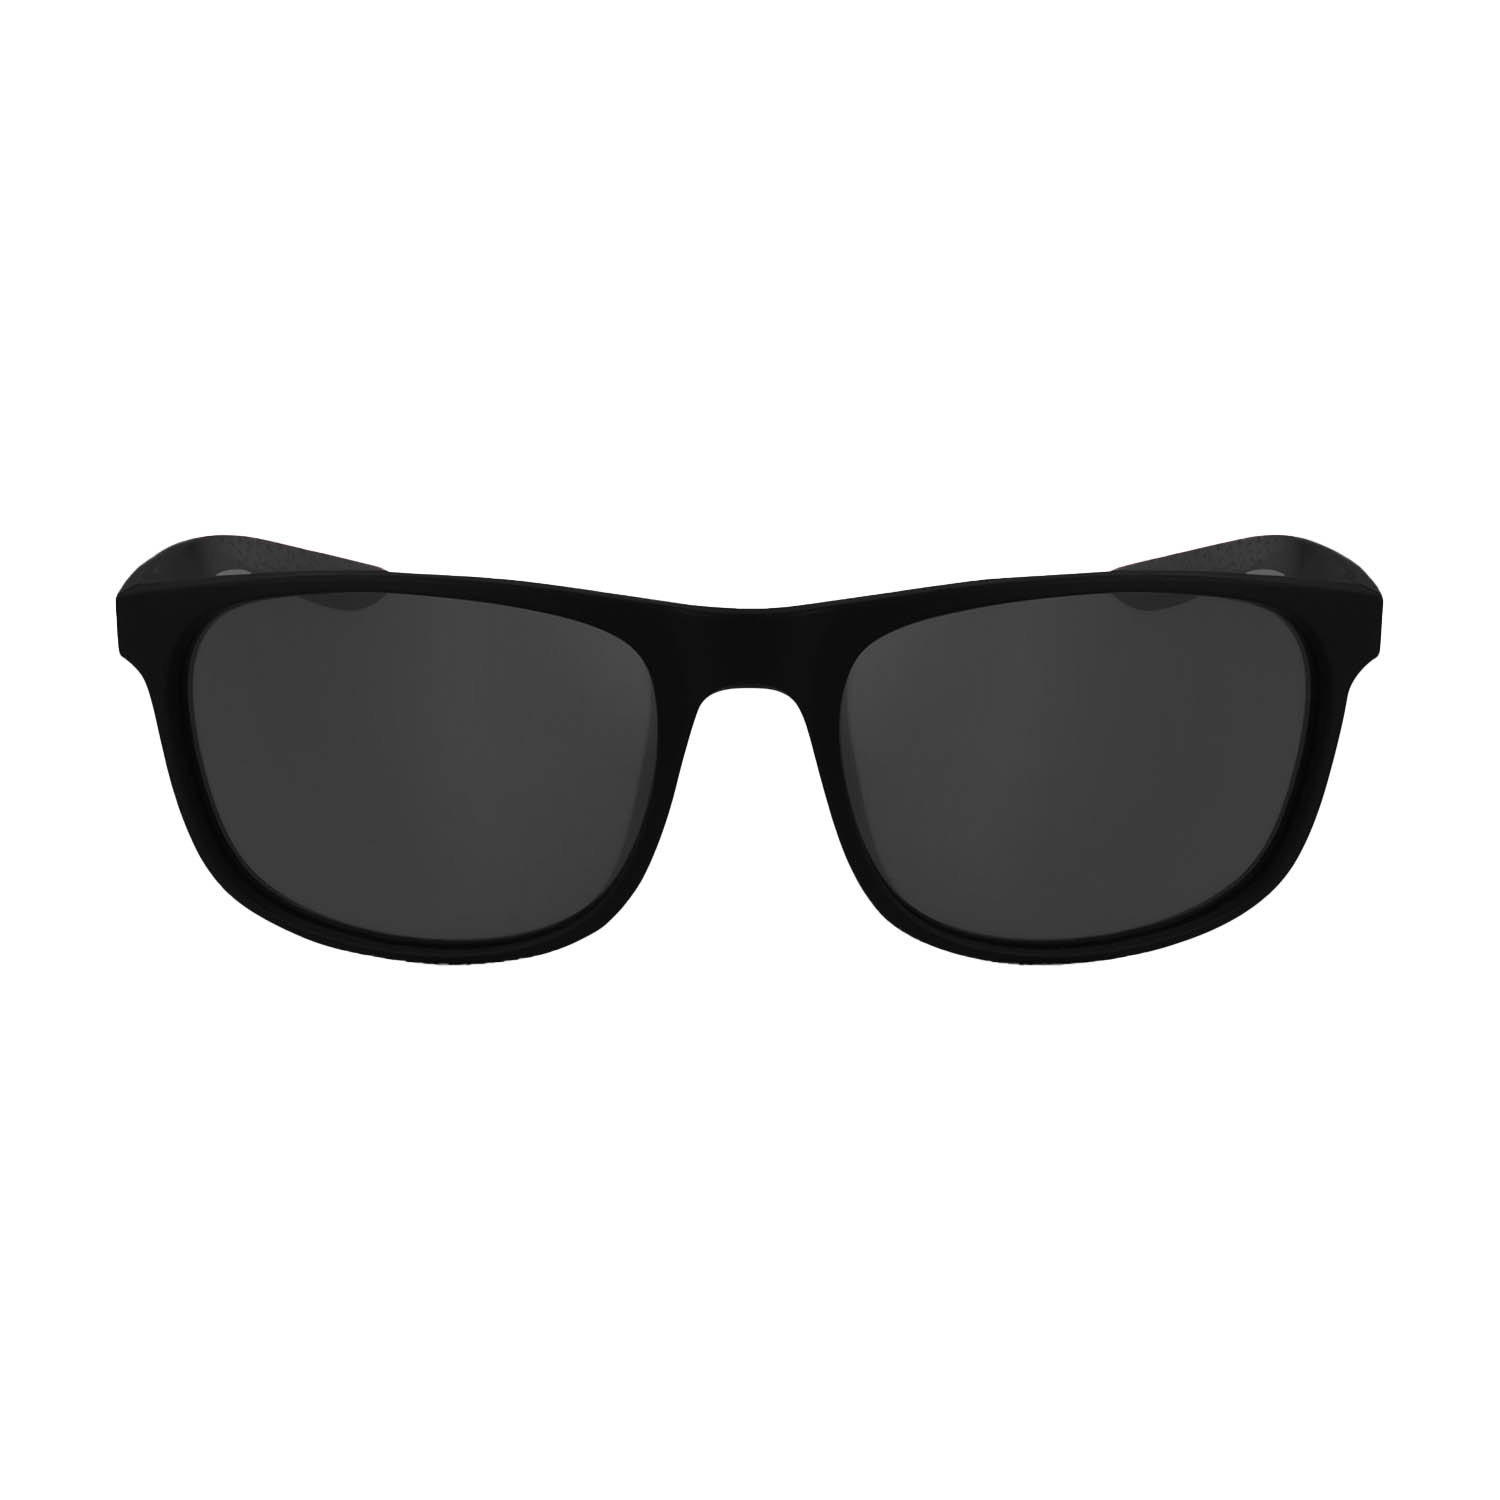 Nike Endure Sunglasses - Matte Black/Silver/Polarized Grey